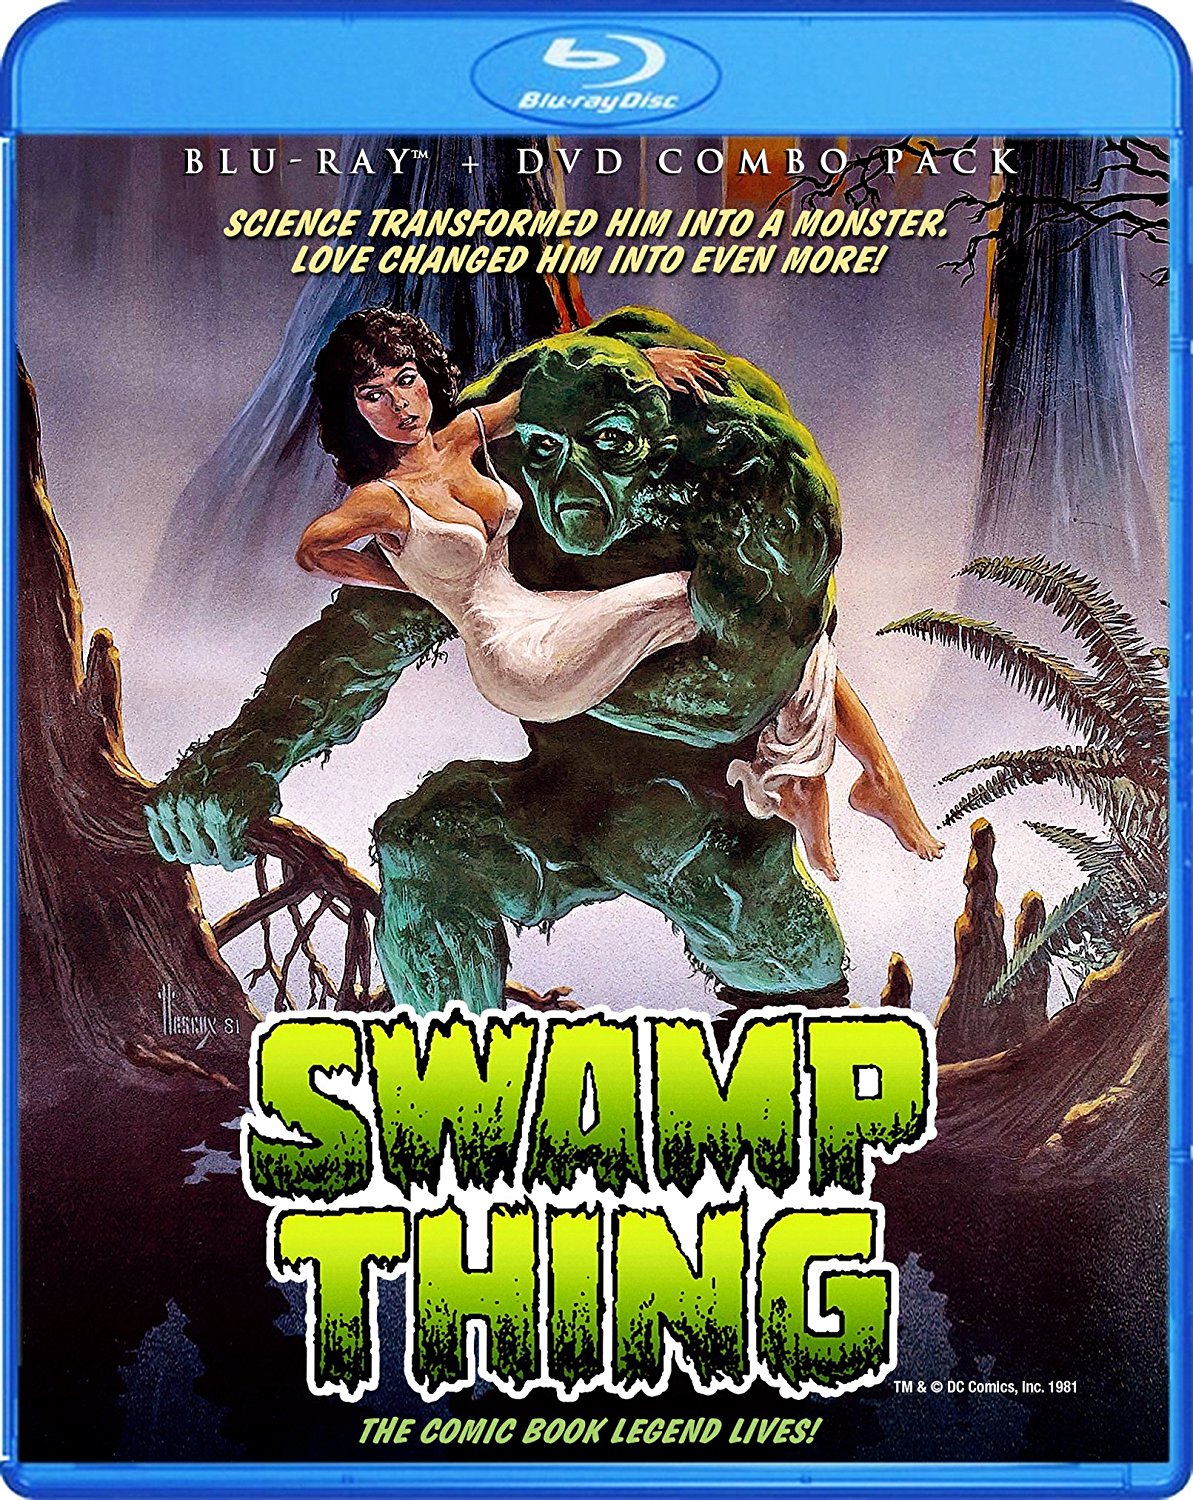 Swamp Thing by Wes Craven, starring Adrienne Barbeau, Louis Jourdan, Ray Wise, Dick Durock